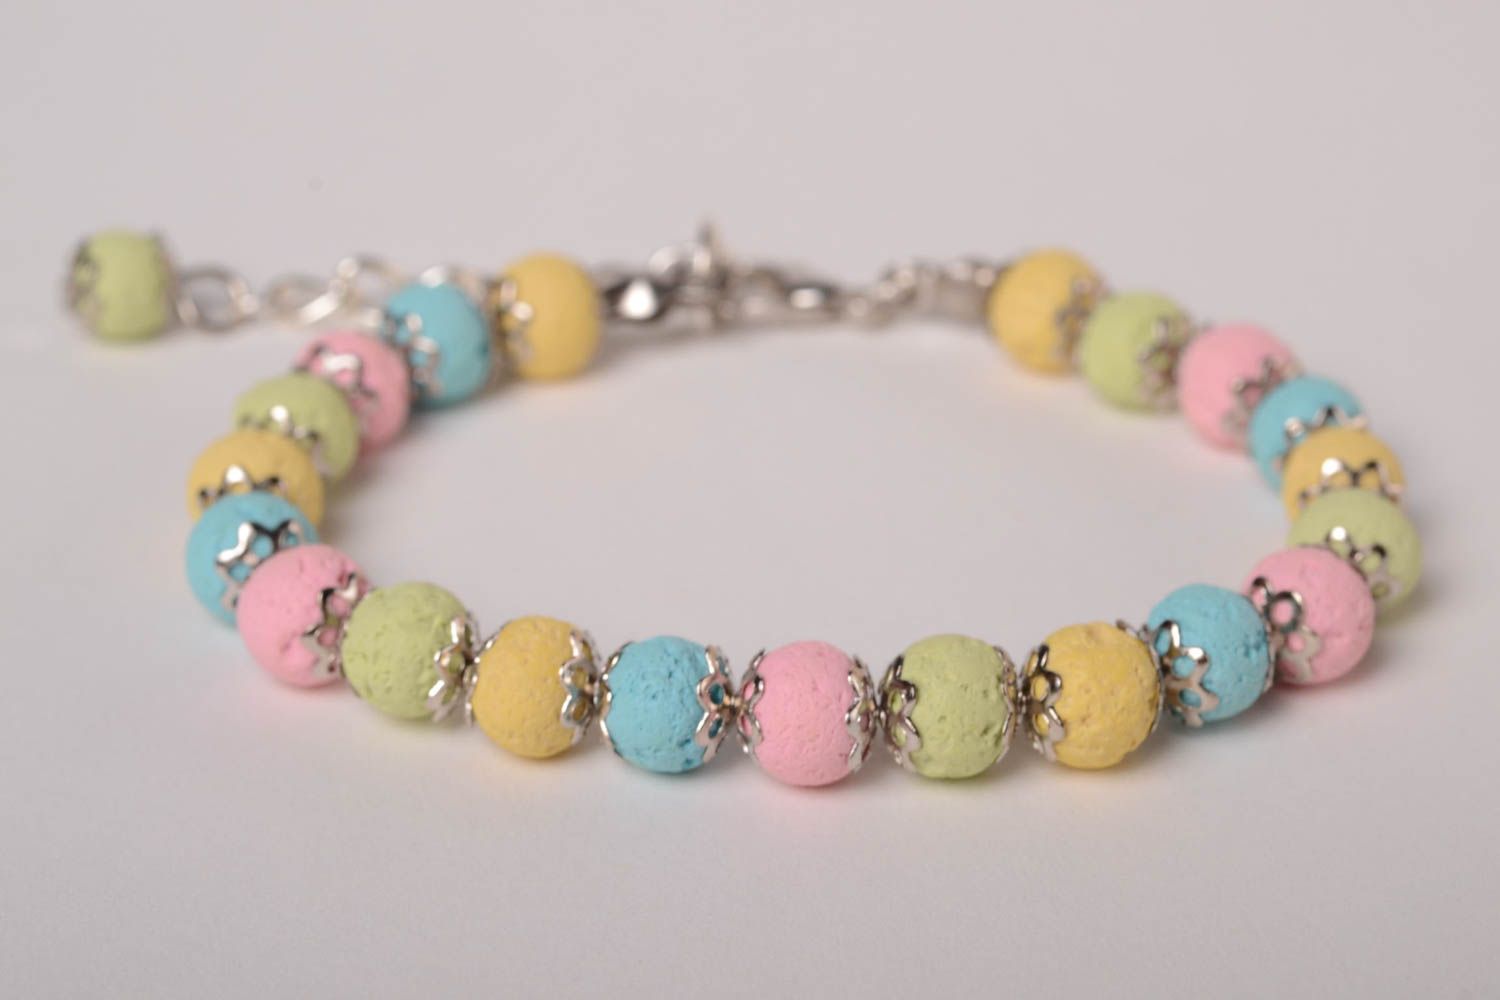 Colorful handmade bracelet bead bracelet polymer clay designer jewelry photo 1